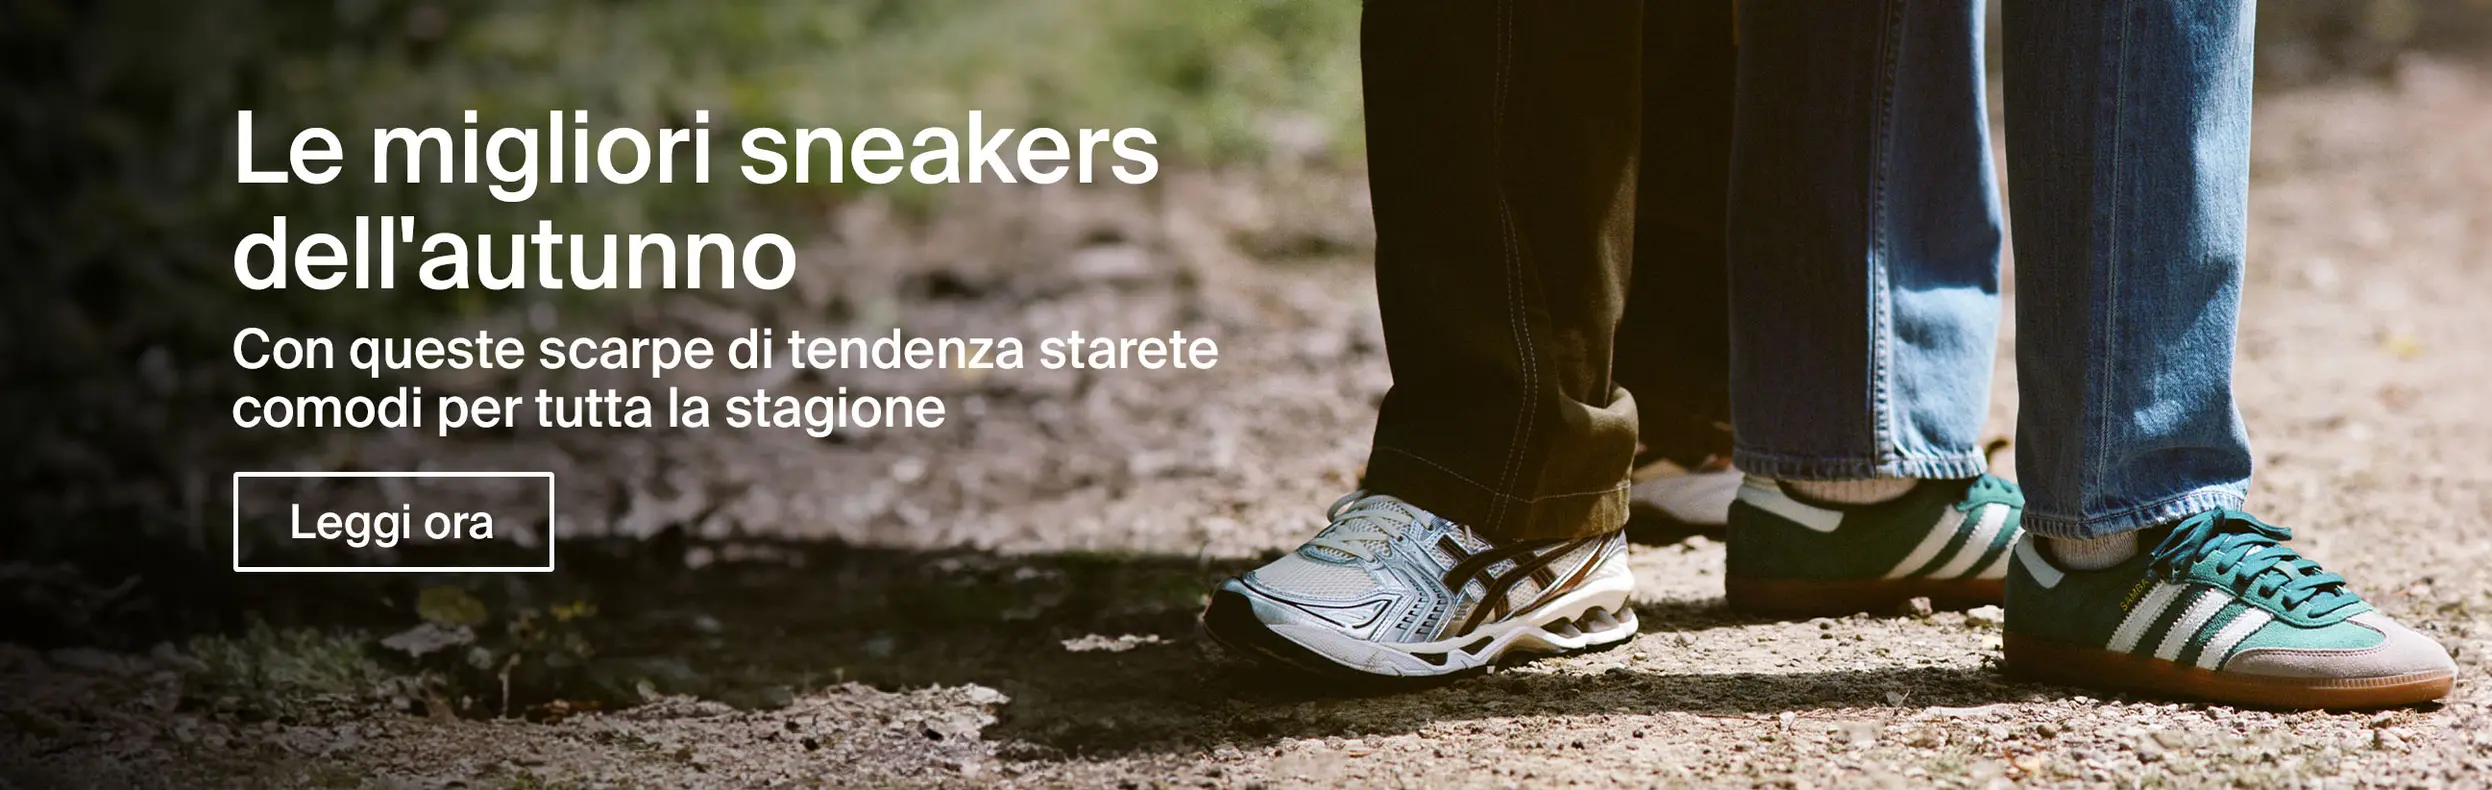 Falls-Trendiest-Sneakers-Italian-Editorial_BannerPrimary_Desktop.jpg